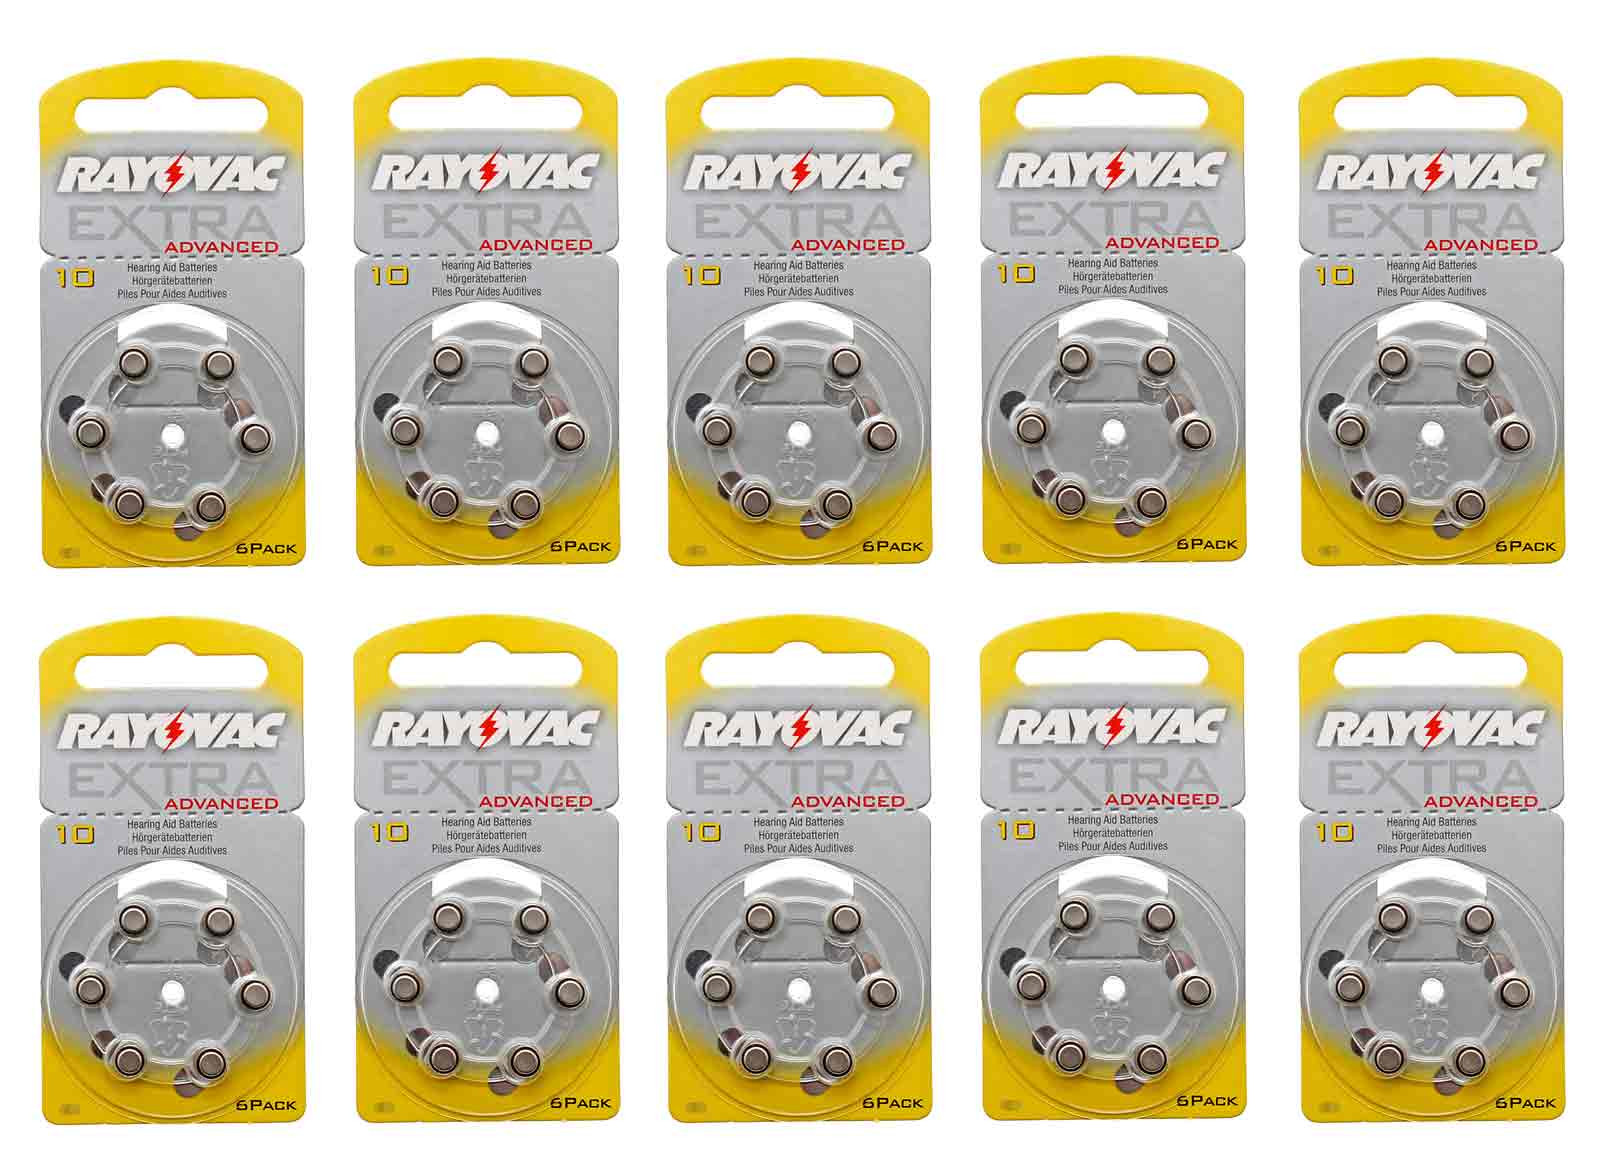 BB 08.18 - 10x 6er Pack Rayovac Extra Advanced Knopfzelle Batterie Typ 10, PR70, für Hörgeräte, hearing aid, 1,4V, 105mAh